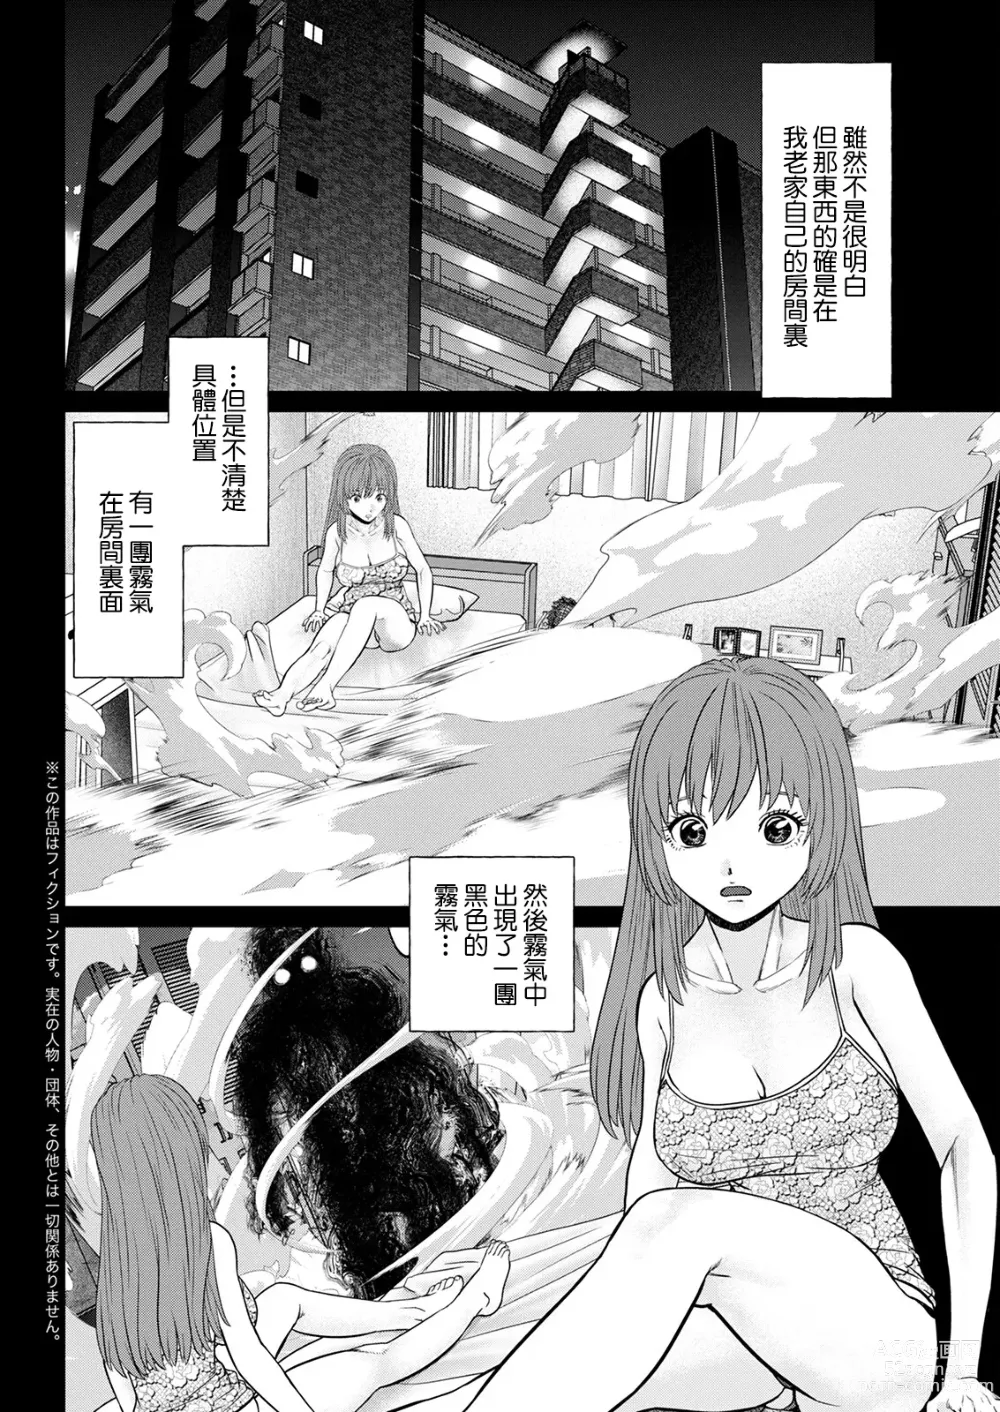 Page 2 of manga Gozen Reiji ni Dakishimete